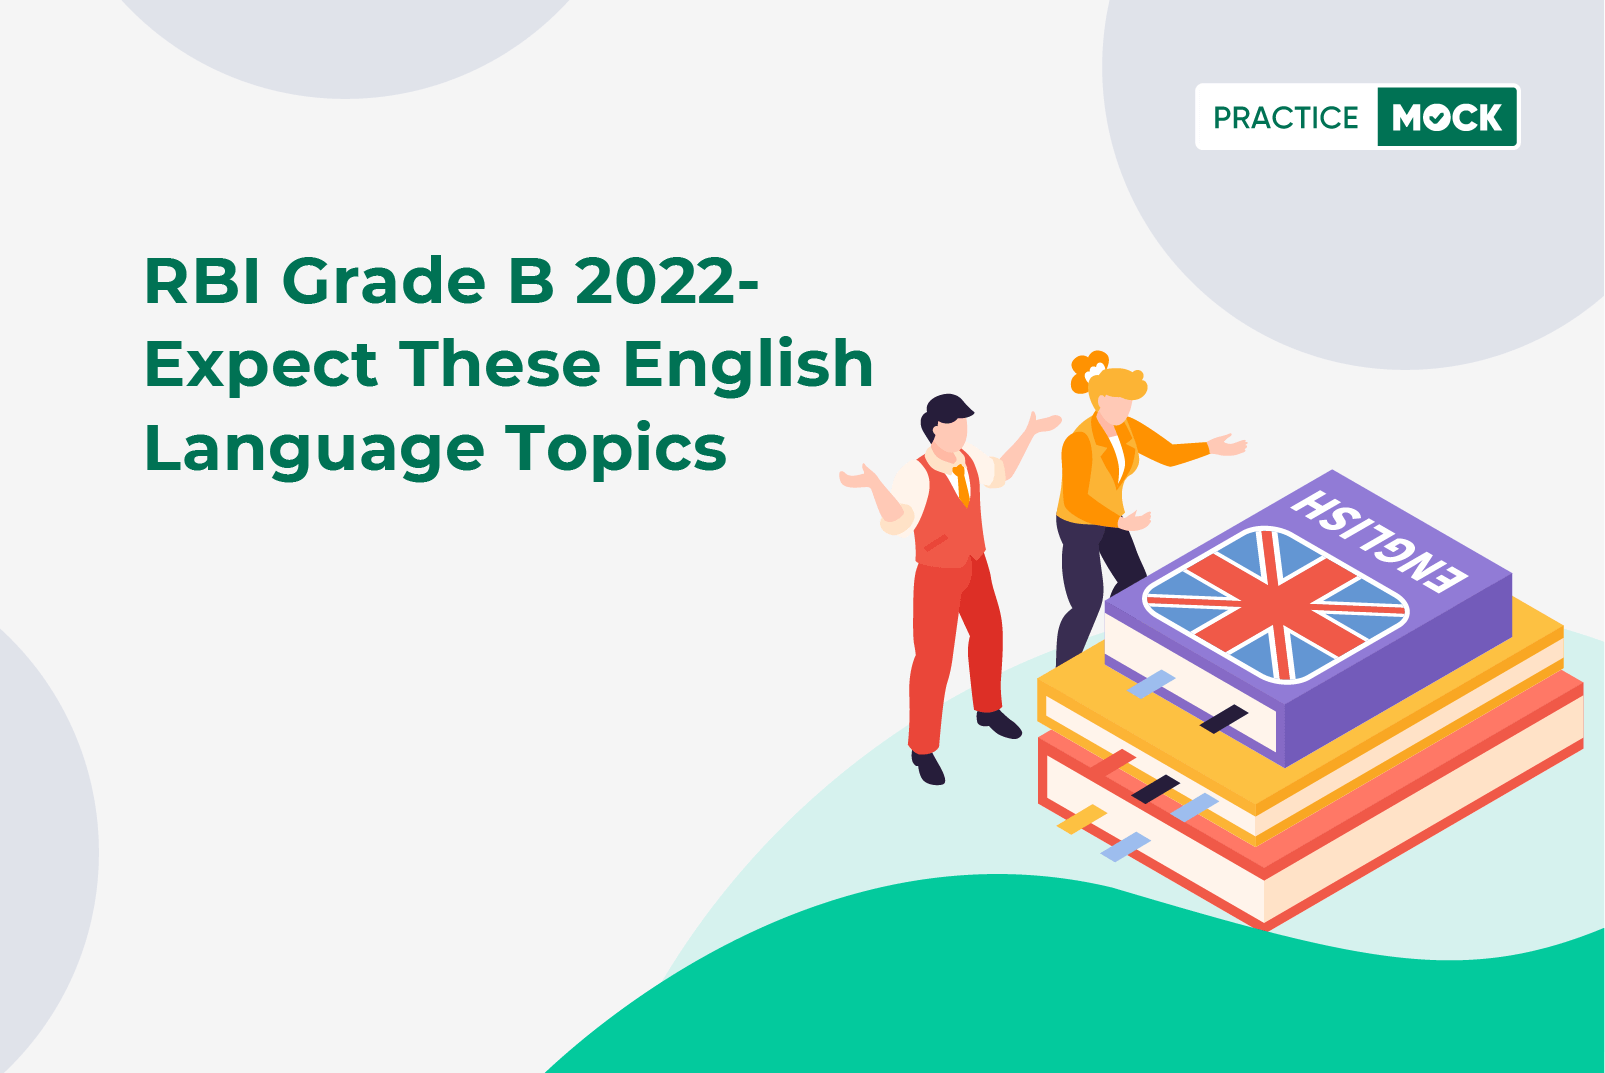 RBI Grade B English Language Topics- Most Expected!